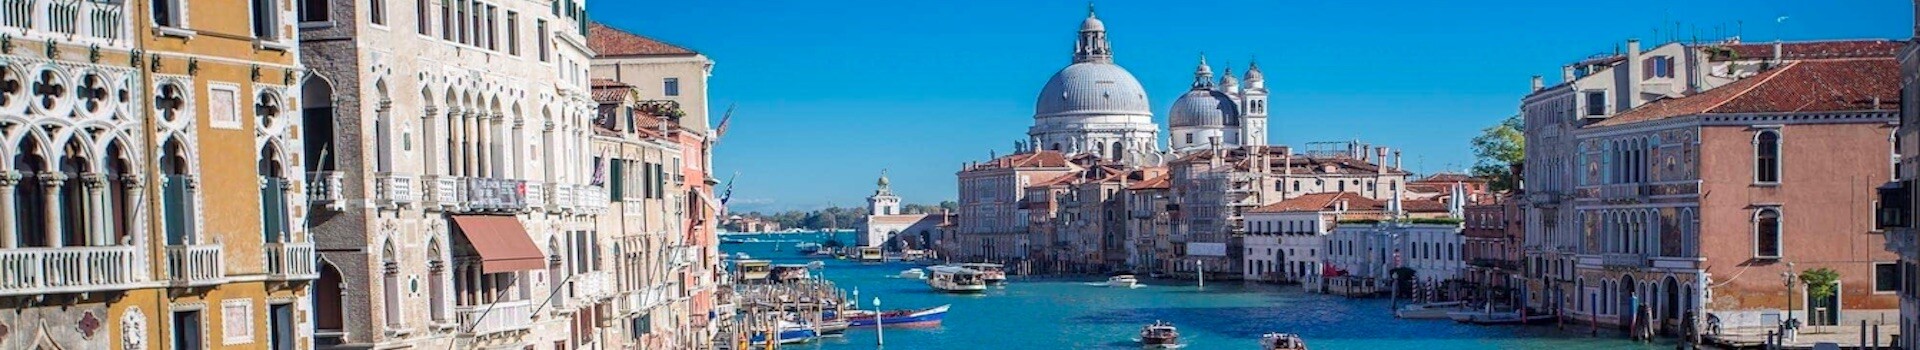 Italy Real Estate Properties For Sale-Santa Maria di Flore in Italy